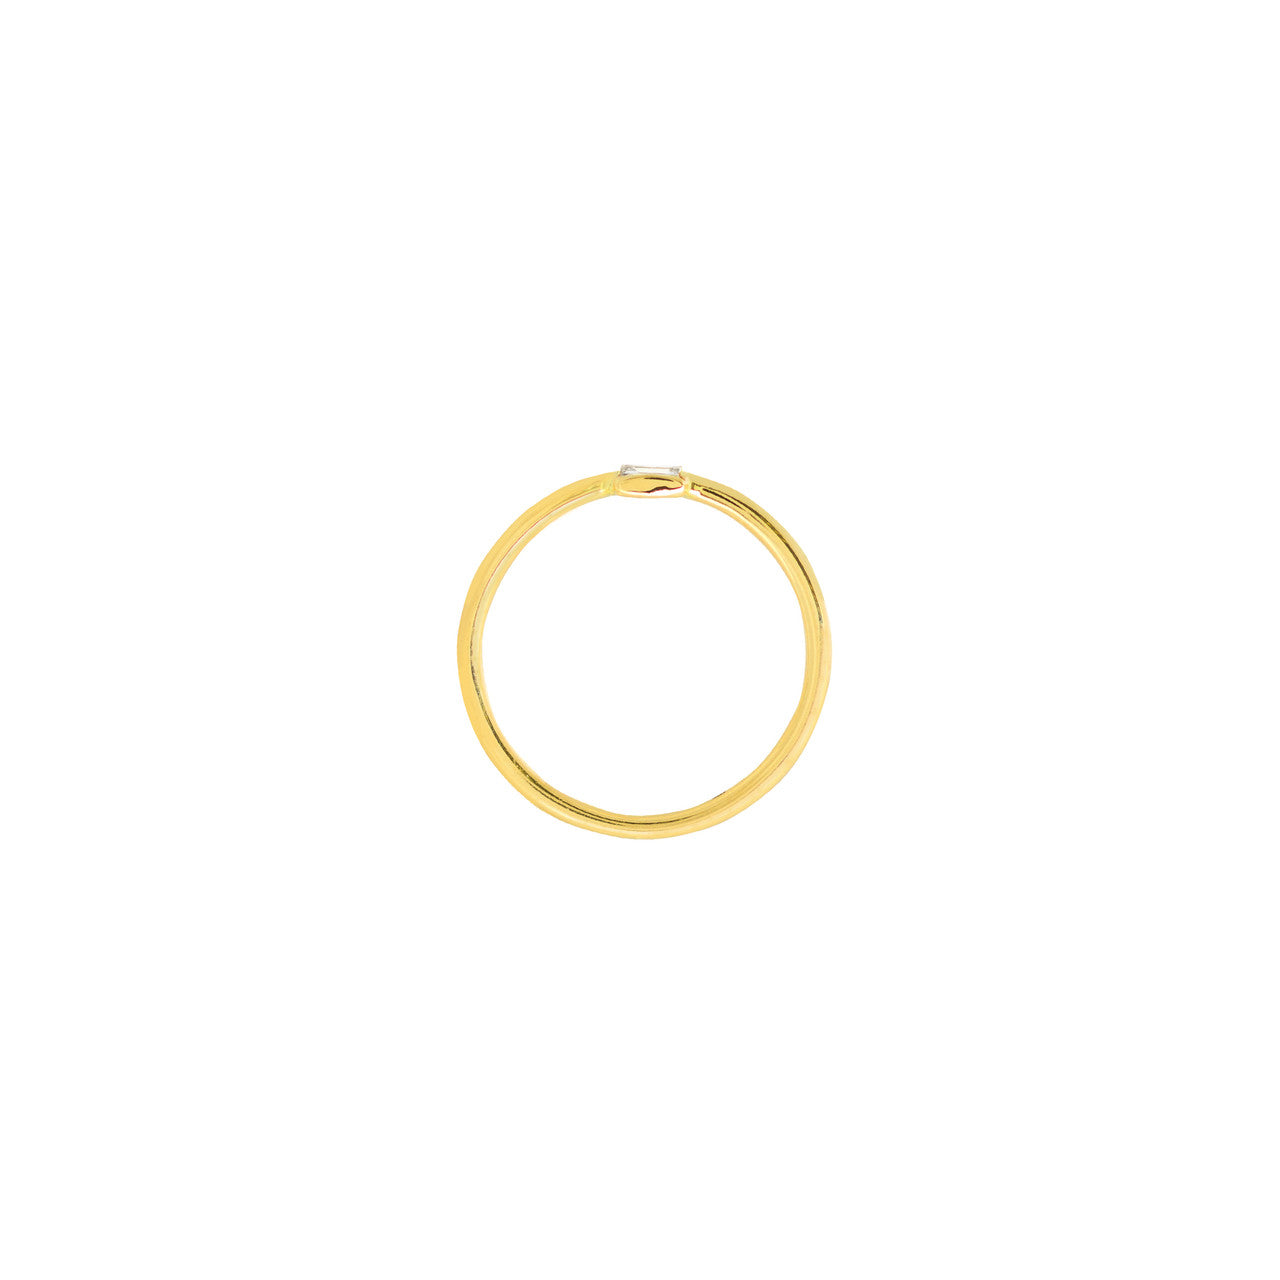 1/10 ctw Baguette Cut Diamond Bezel Set Fashion Ring in 14k Yellow Gold